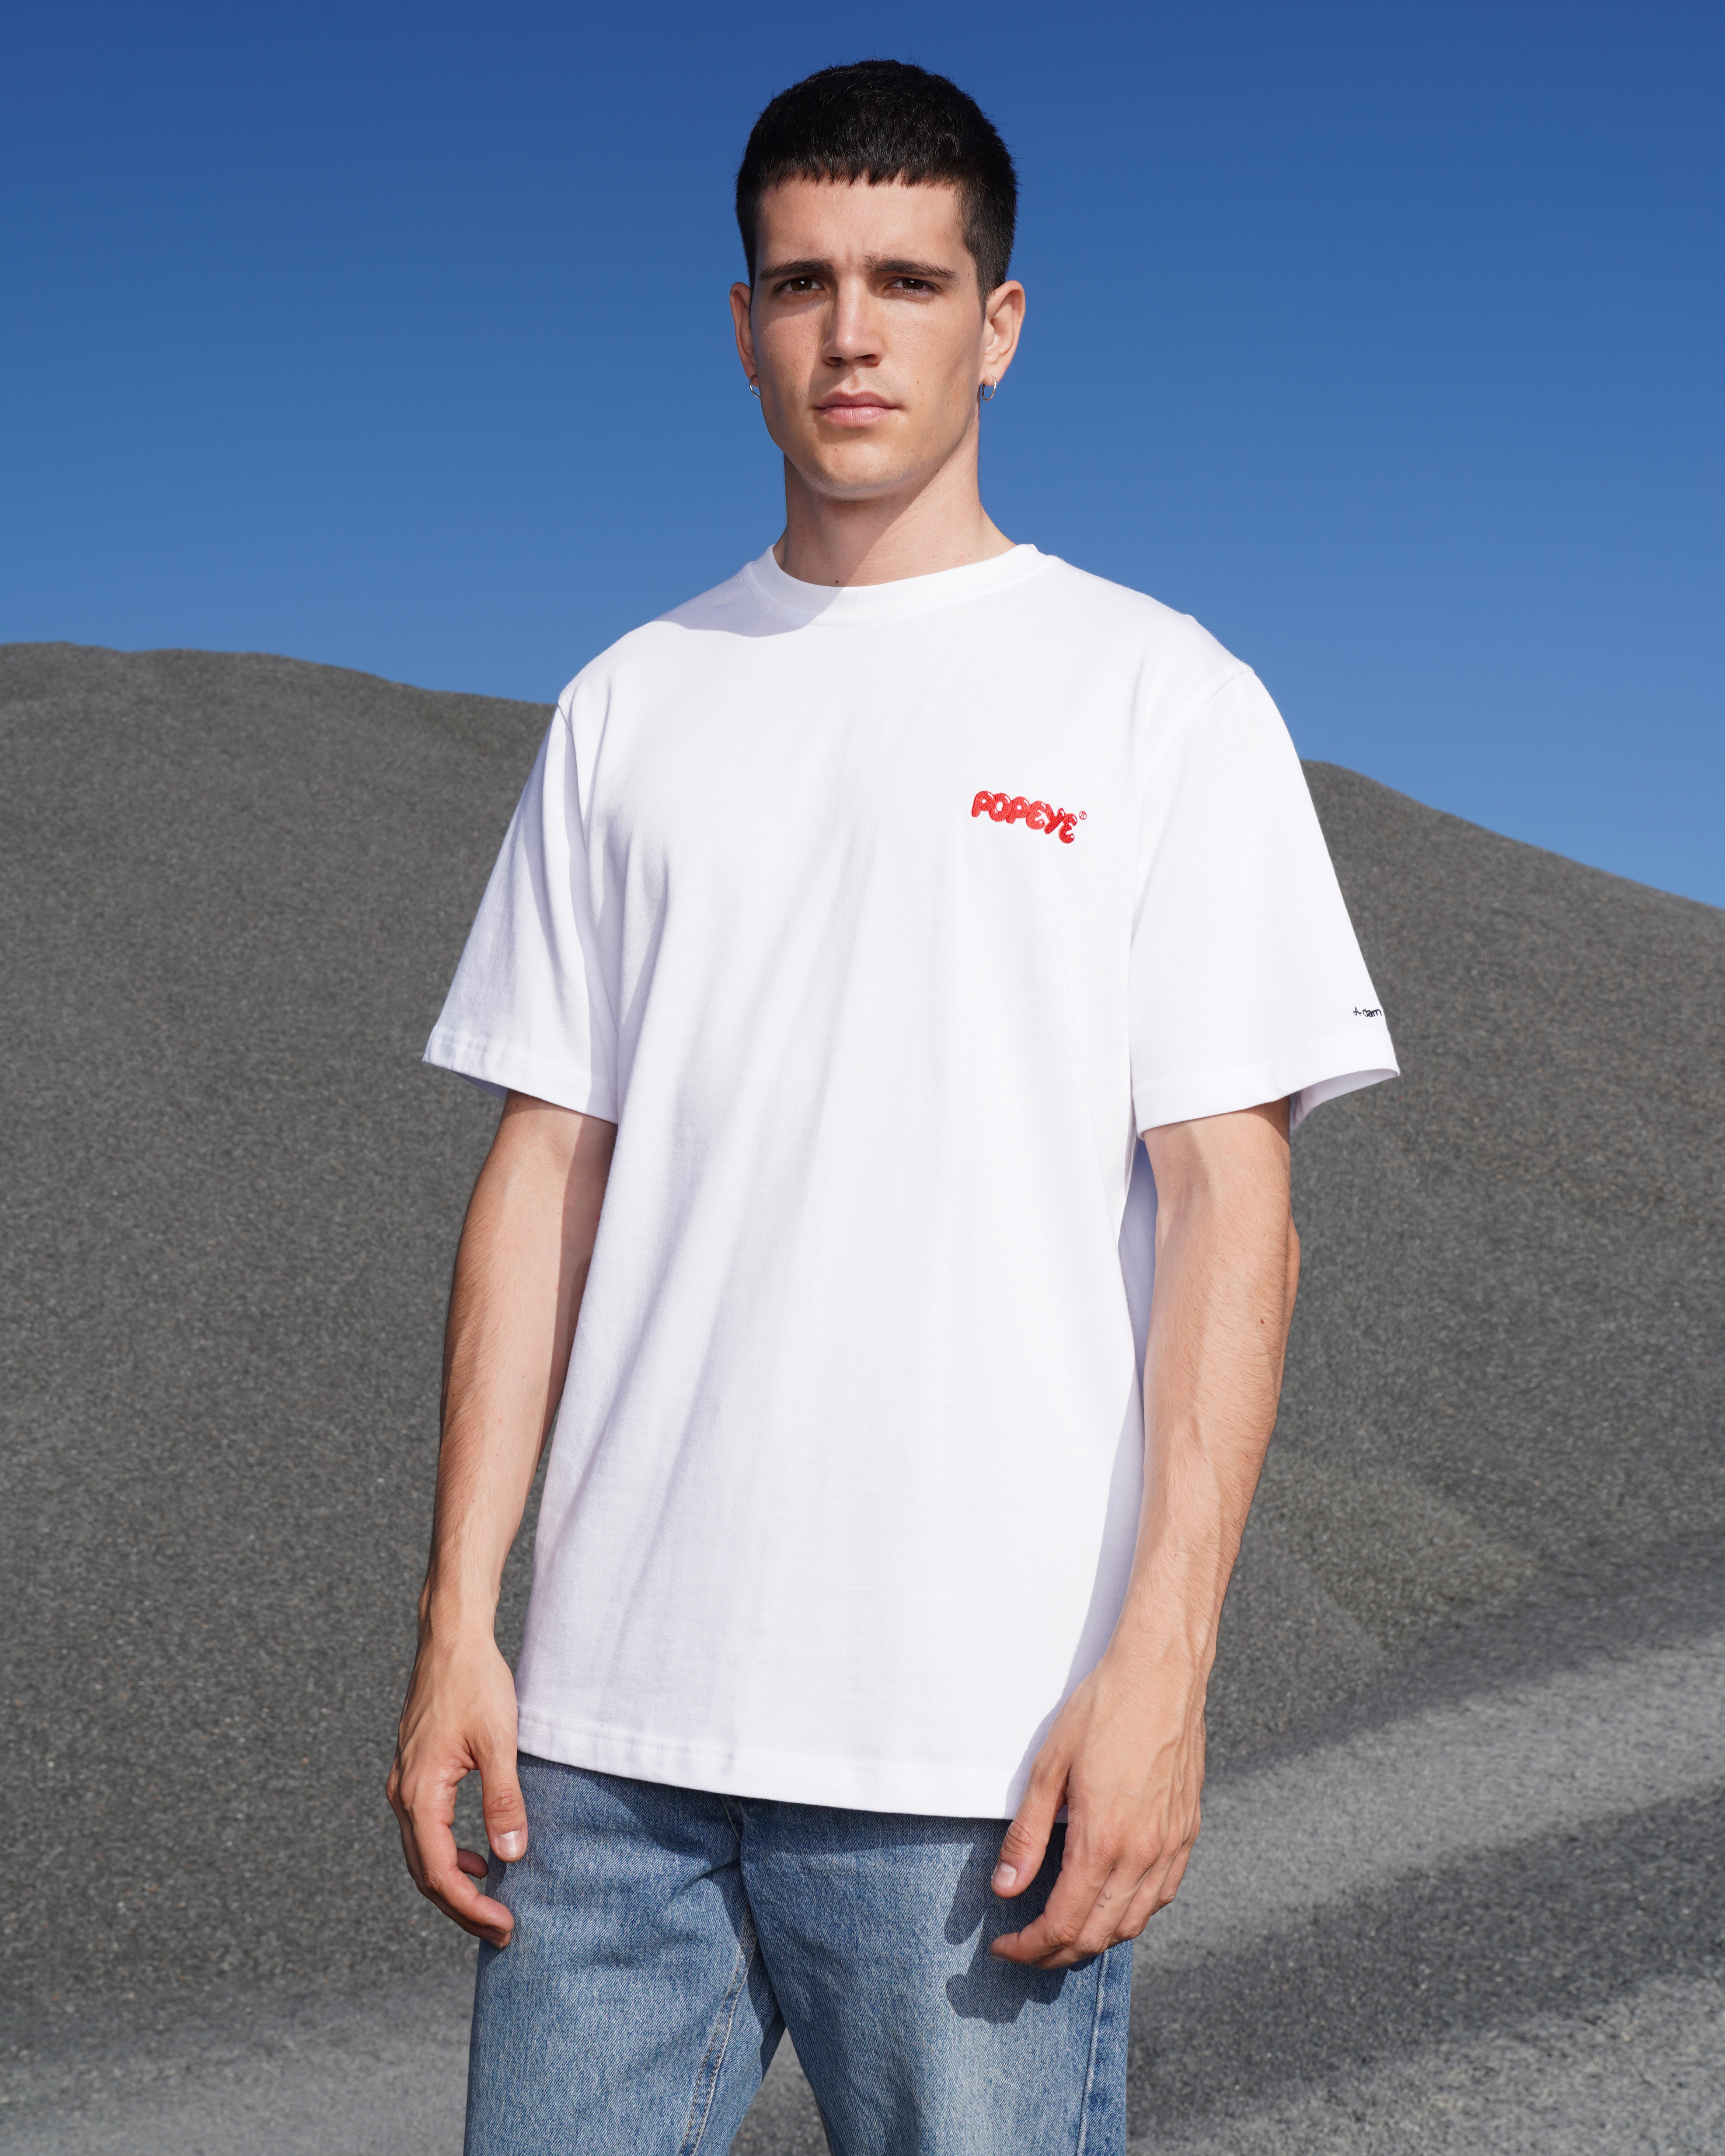 x organic with A-dam Popeye White T-shirt Popeye | A-dam premium print